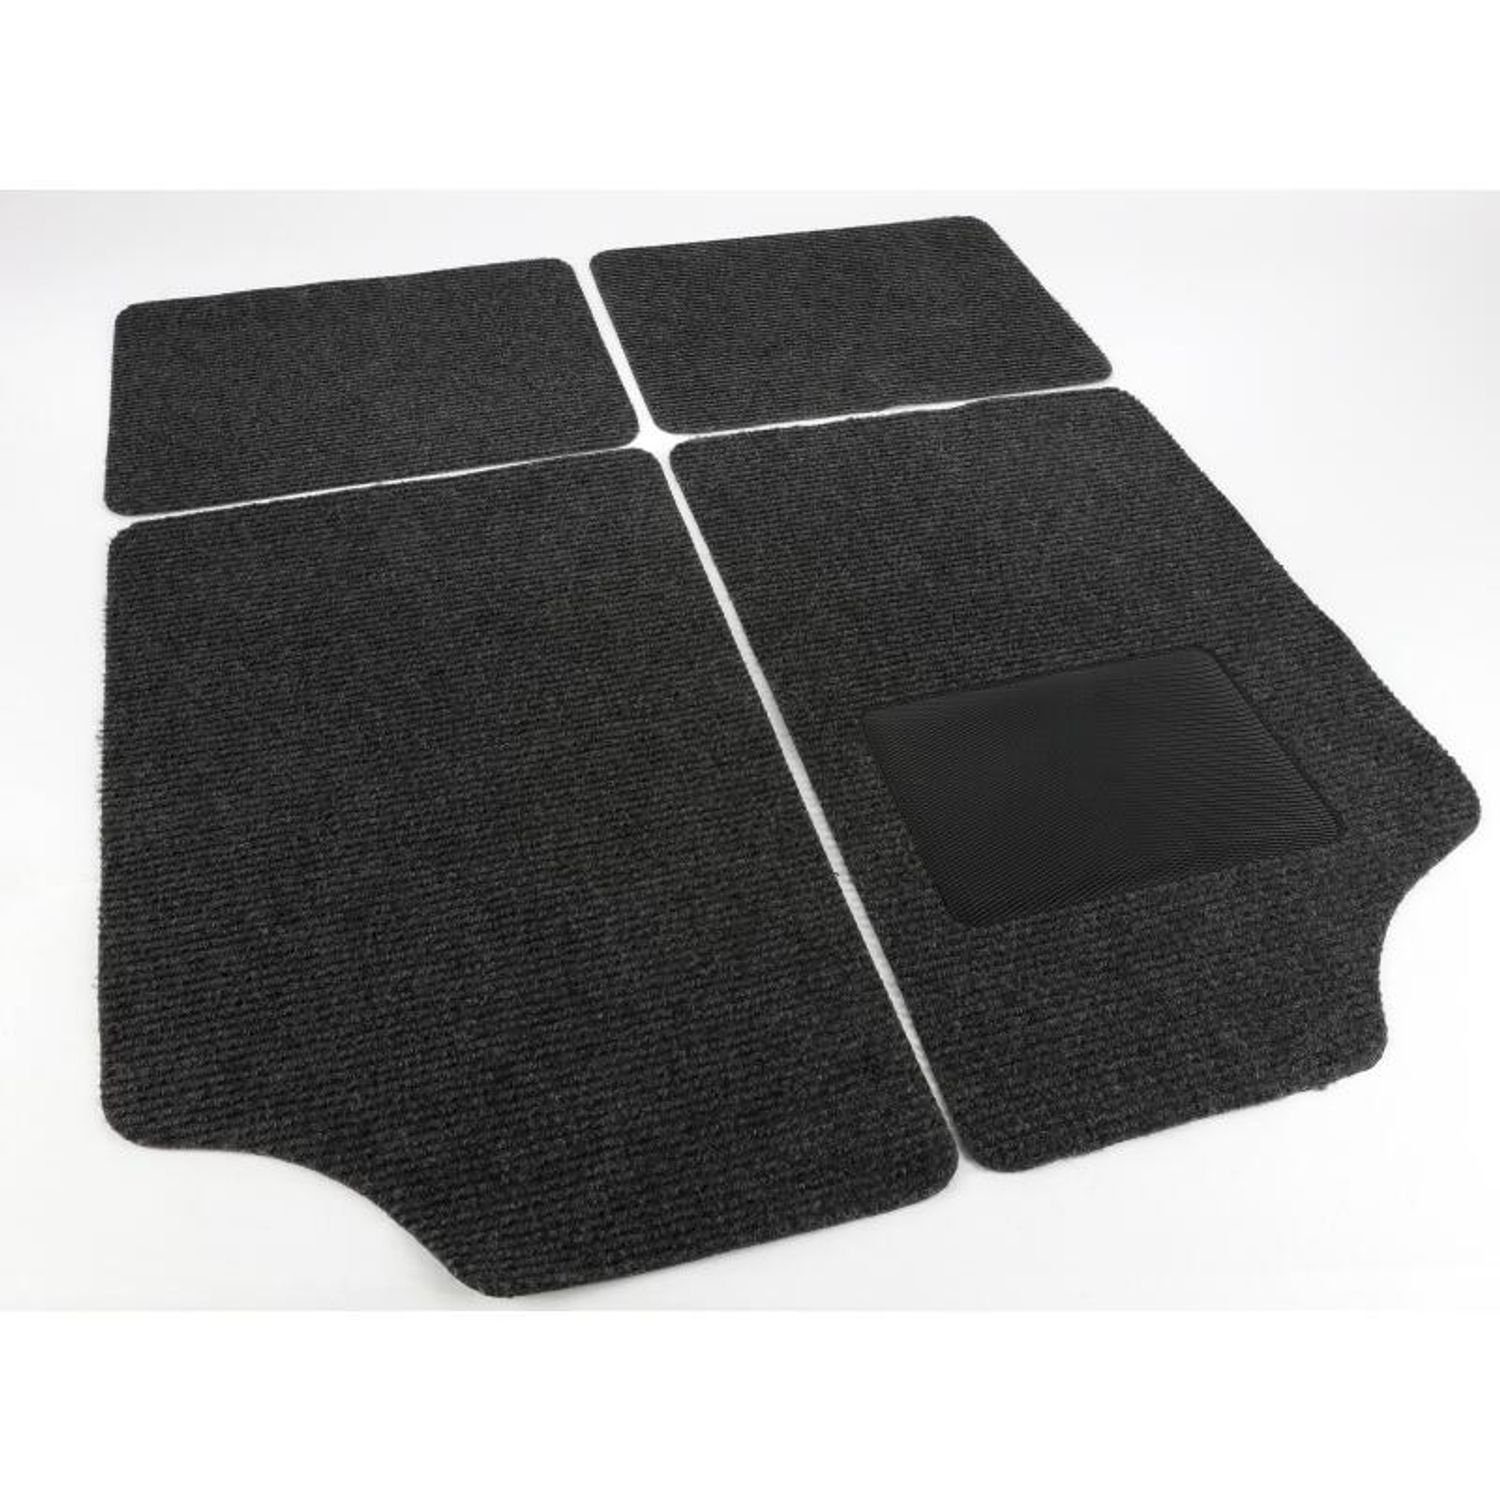 Gebufa Multimat Fahrz 10 Textil Passform x Auto Set Schwarz 4 Fußmatten Auto-Fußmatte teilig Teppich